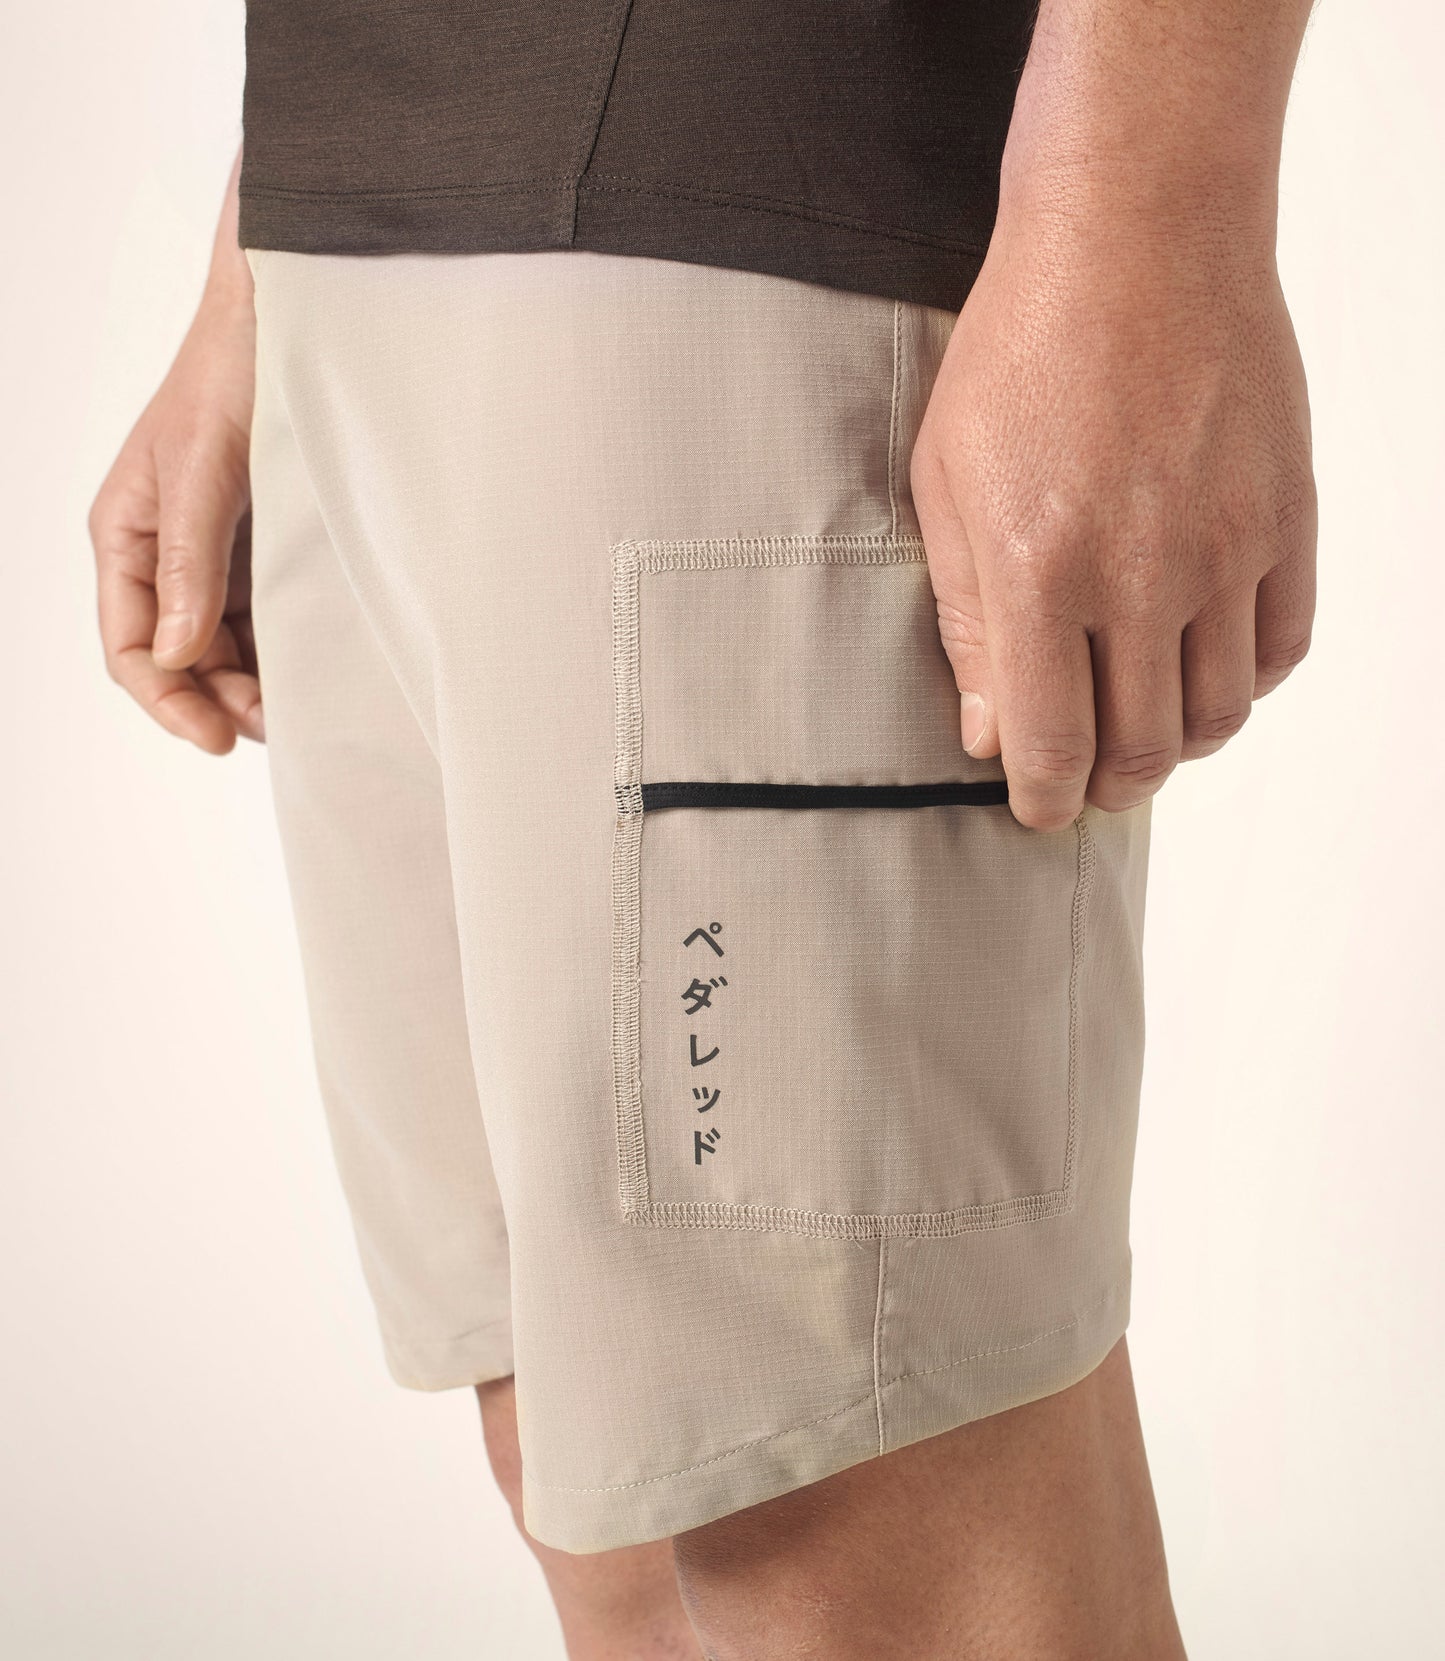 Men's Jary All-road Shorts